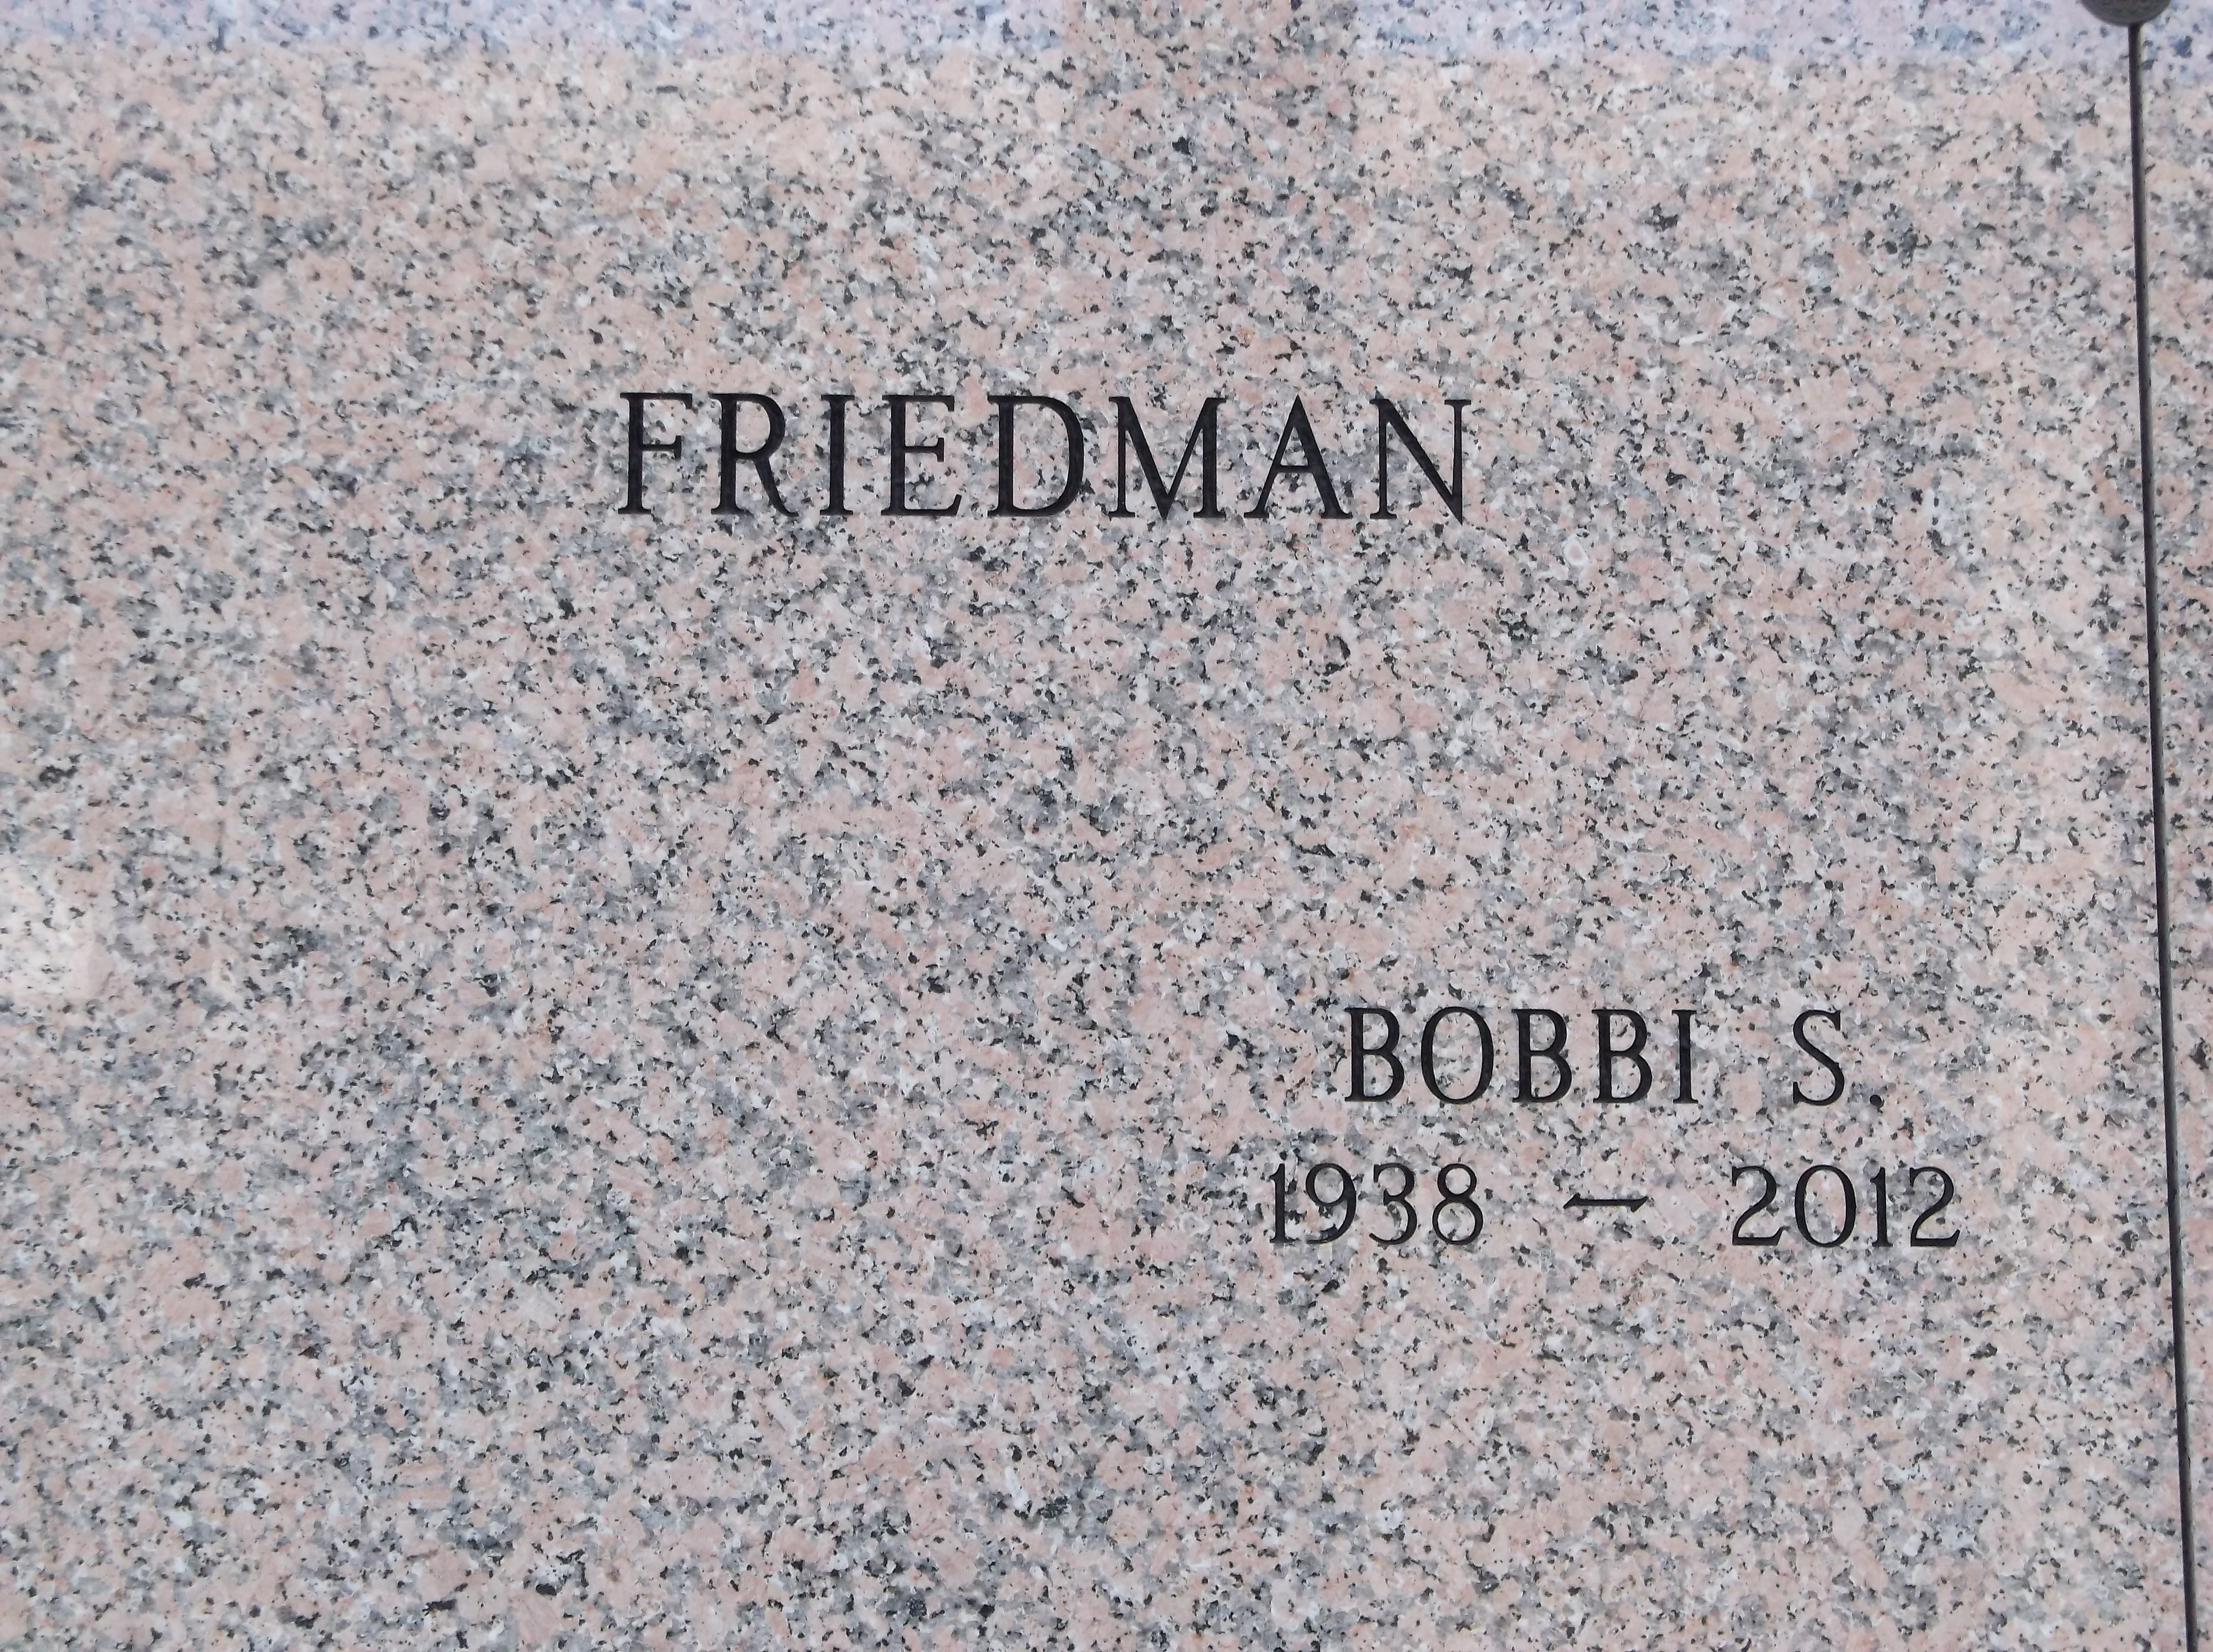 Bobbi S Friedman